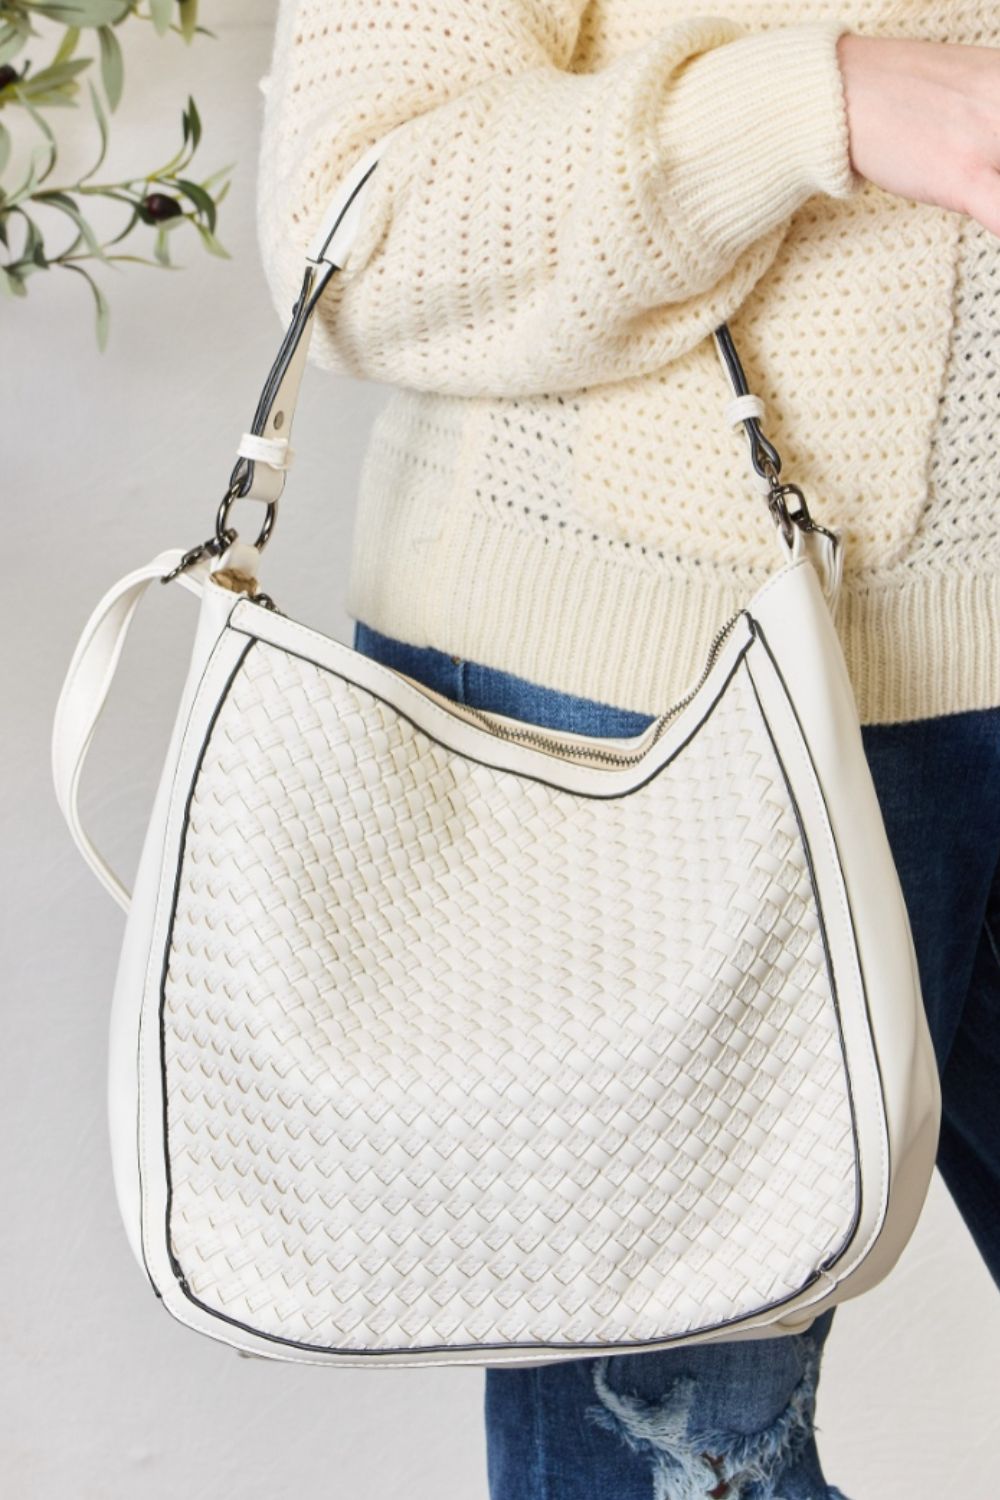 SHOMICO Weaved Vegan Leather Handbag WHITE One Size